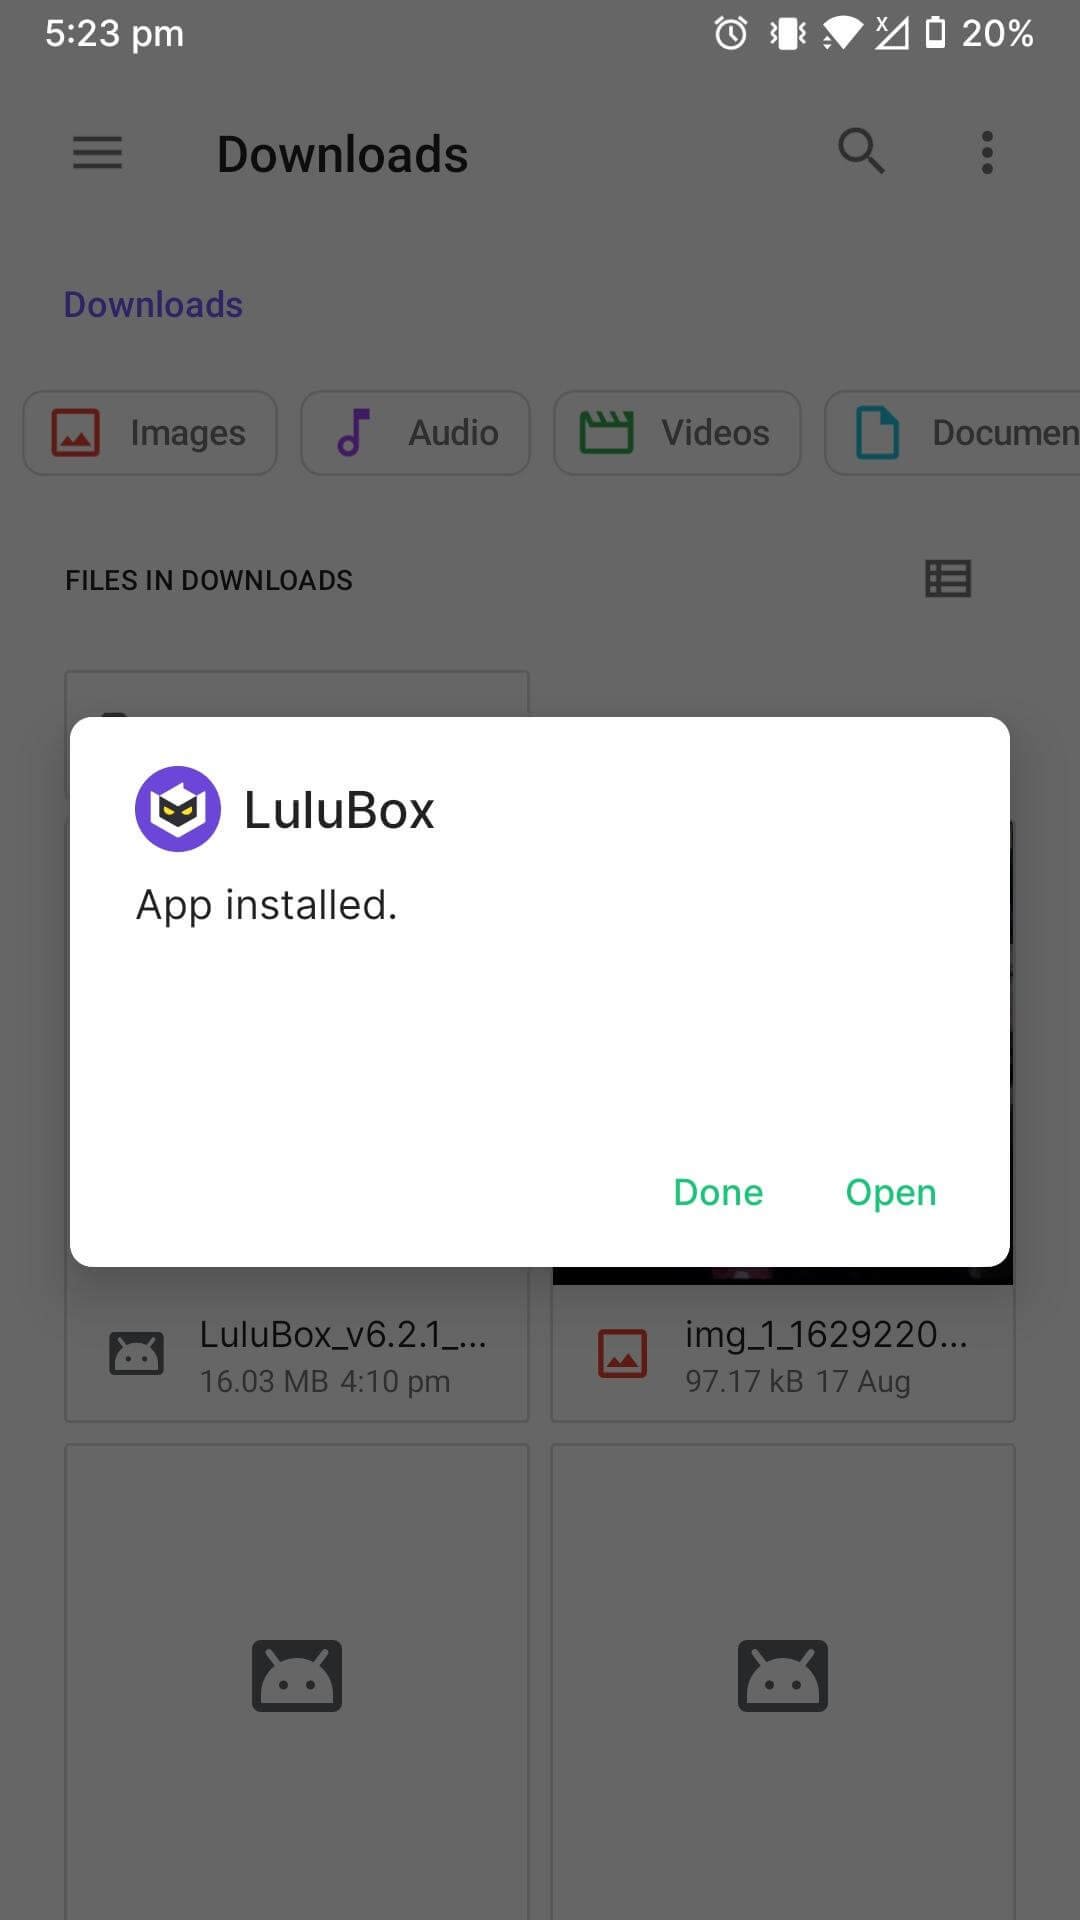 lulubox apk installed